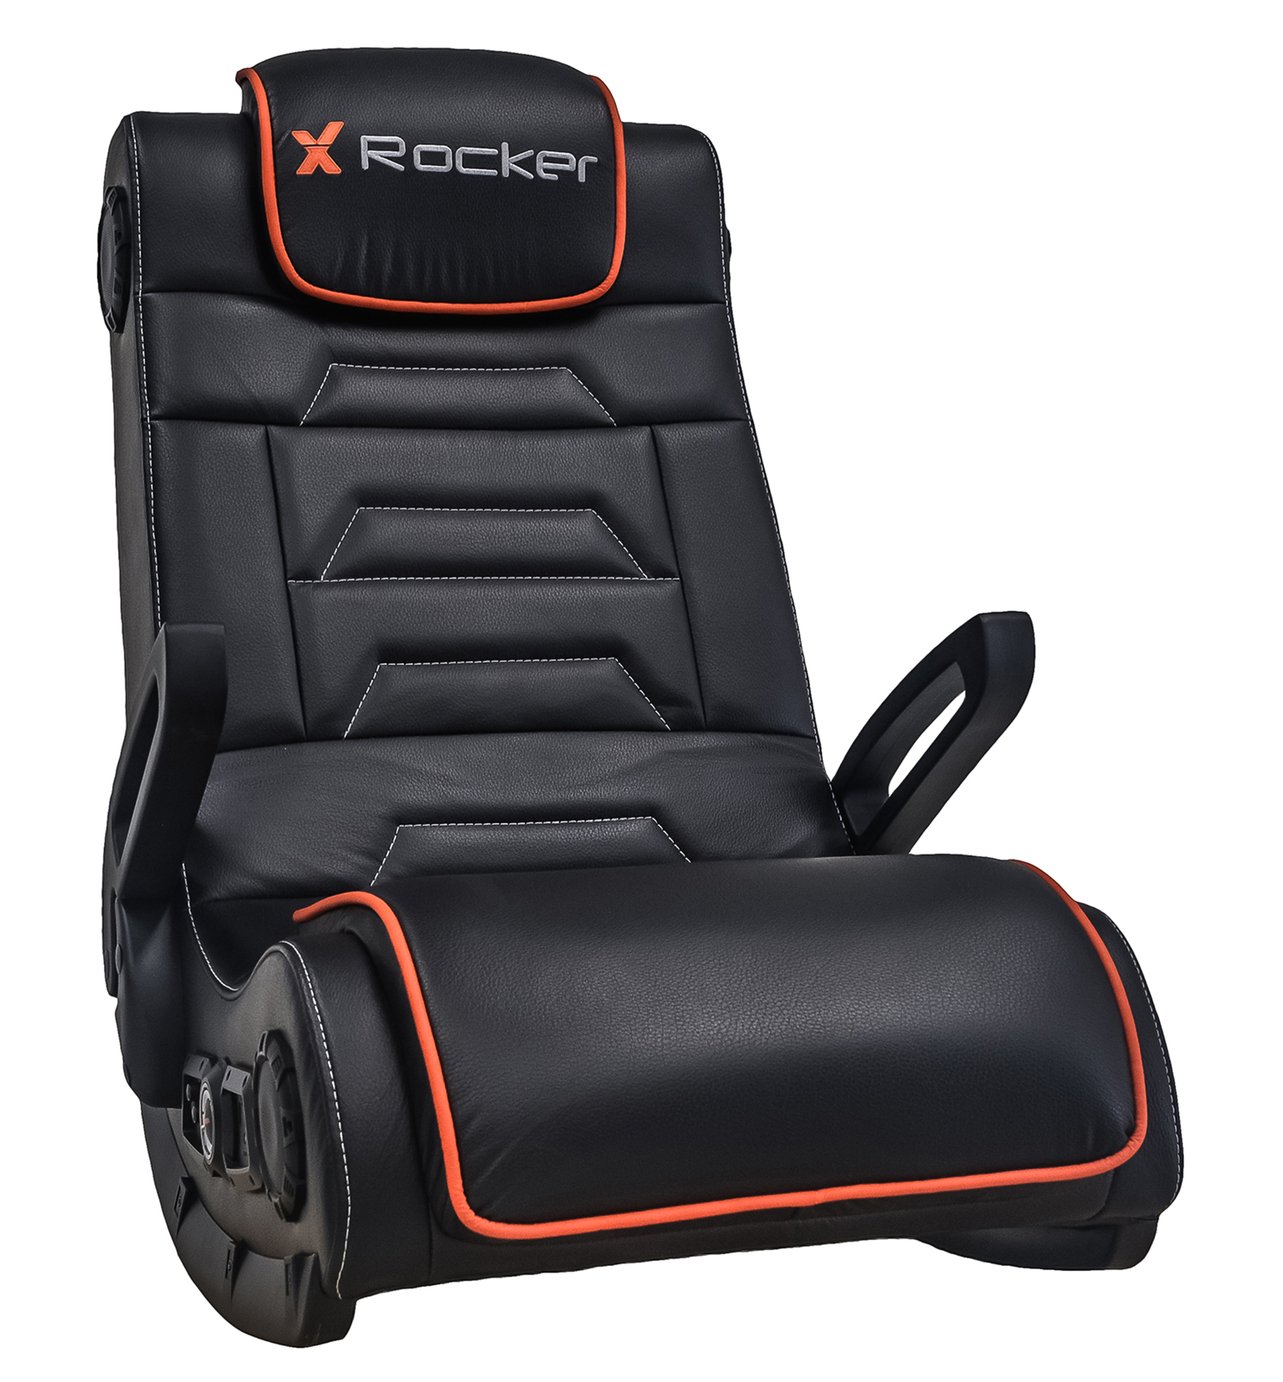 X Rocker Sentinel Floor Rocker Gaming Chair Reviews